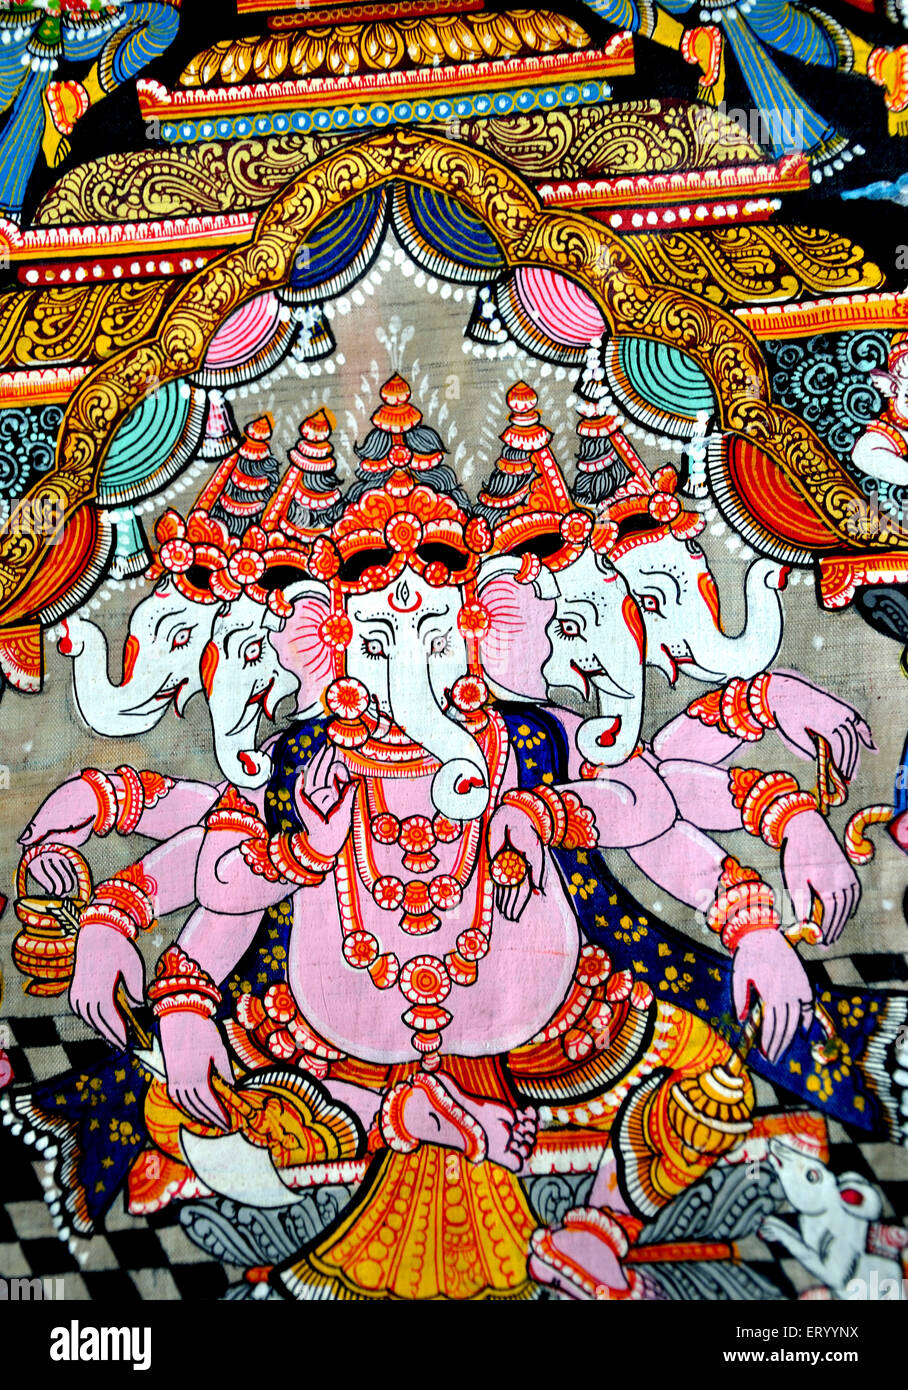 Ganesha art hi-res stock photography and images - Alamy